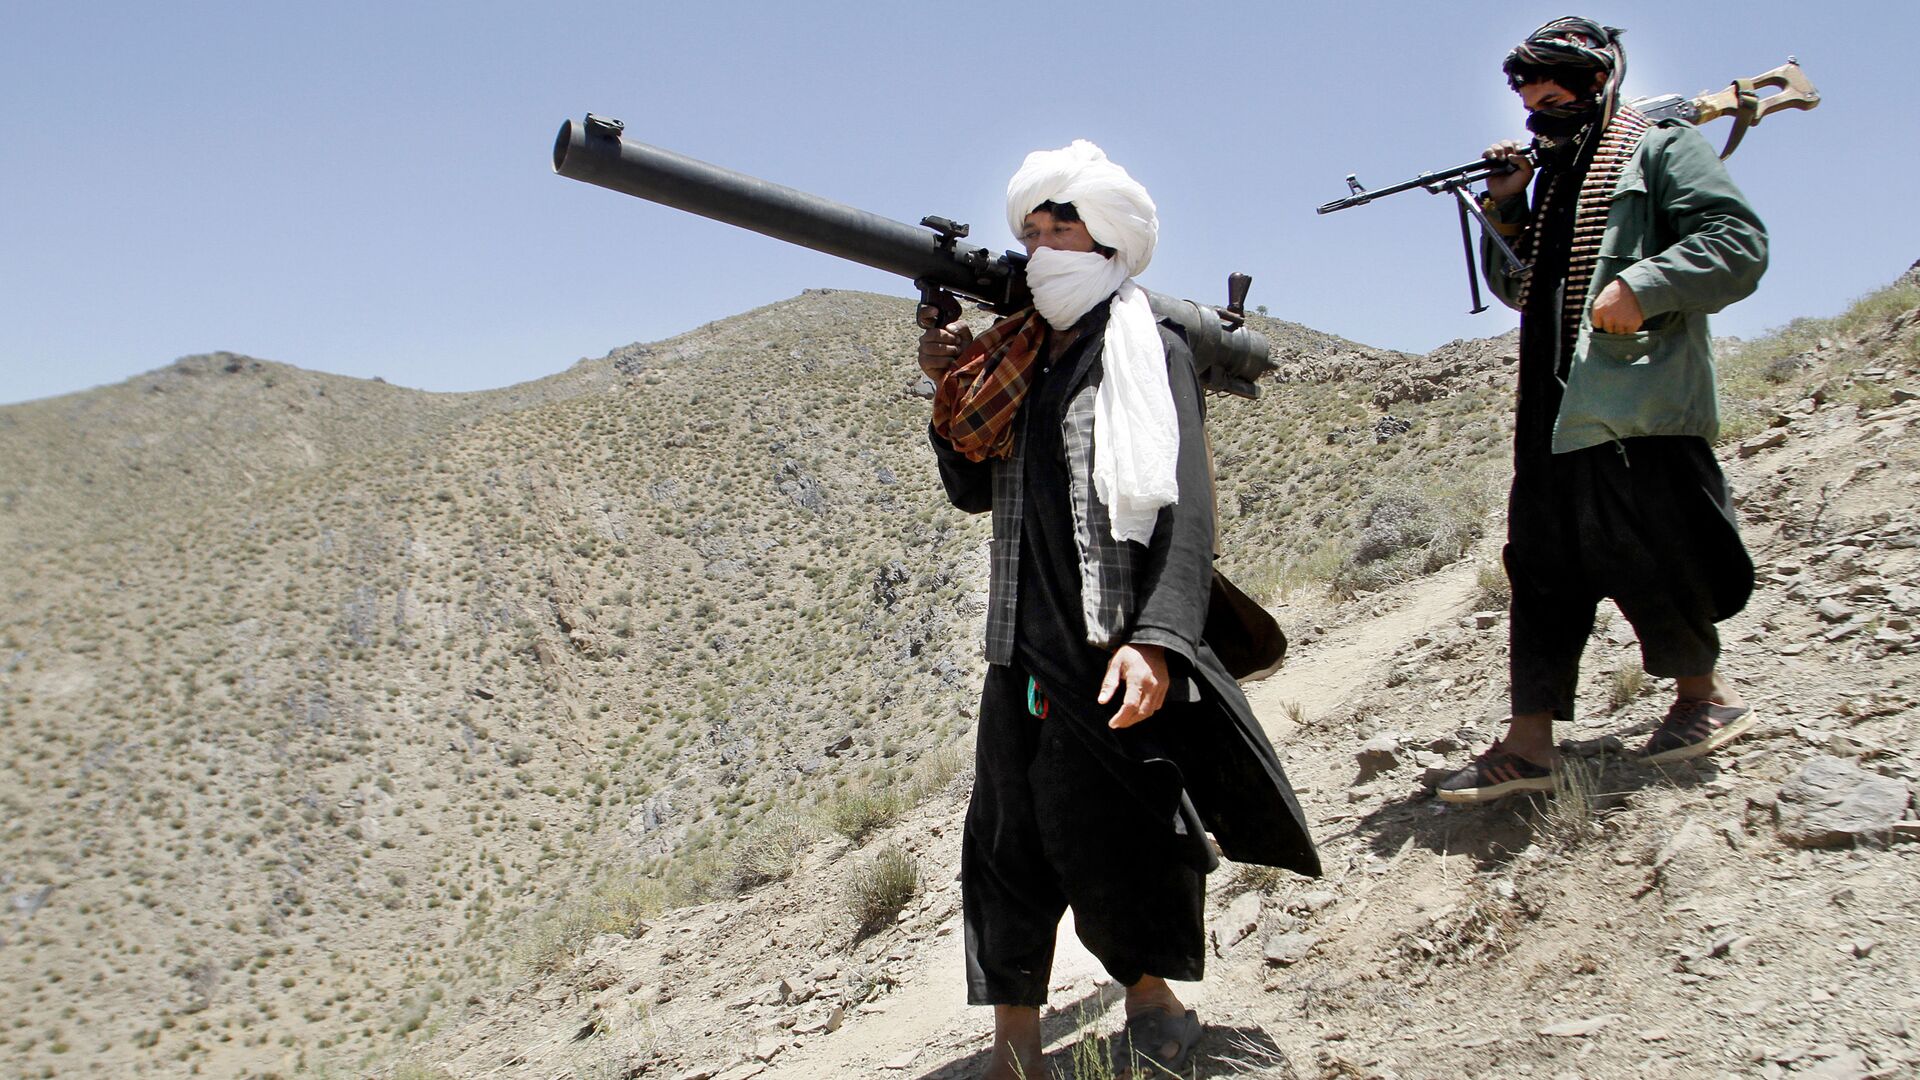 Члены террористического движения Талибан в Афганистане - Sputnik Таджикистан, 1920, 15.07.2021